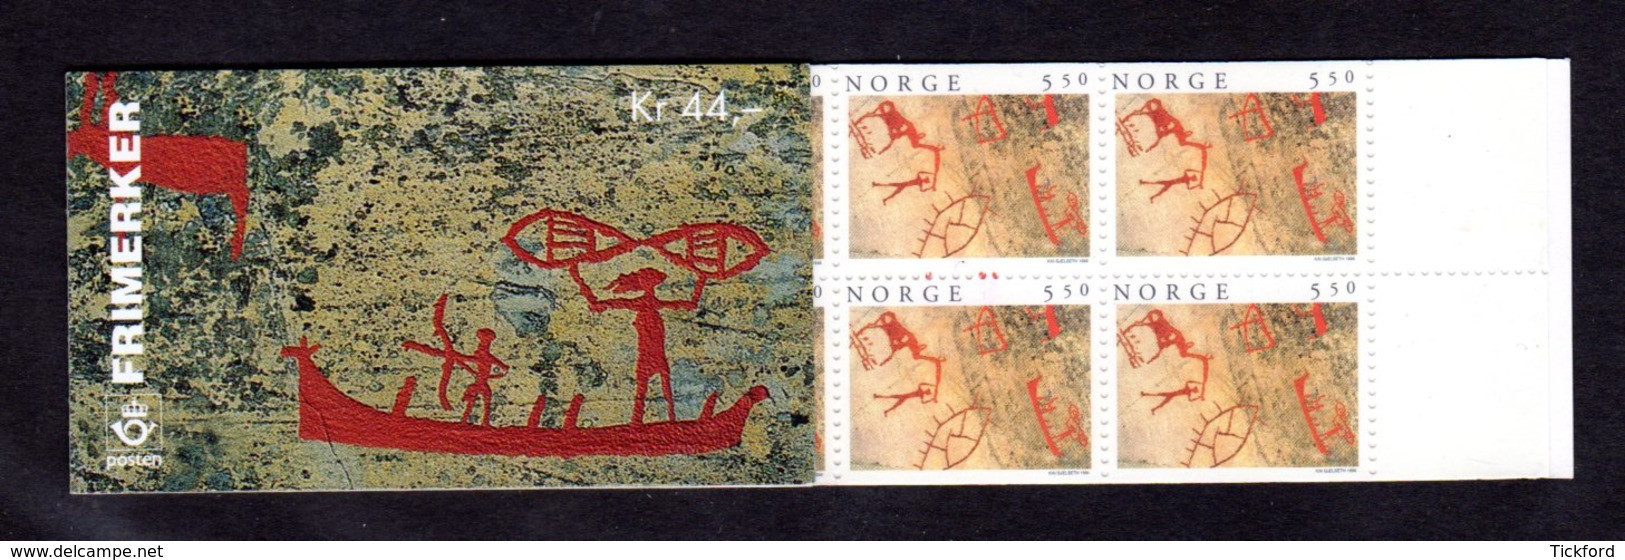 NORVEGE 1996 - CARNET Yvert C1165 - Facit H92 - NEUF** MNH - Tourisme, Peintures Rupestres D'Alta - Markenheftchen